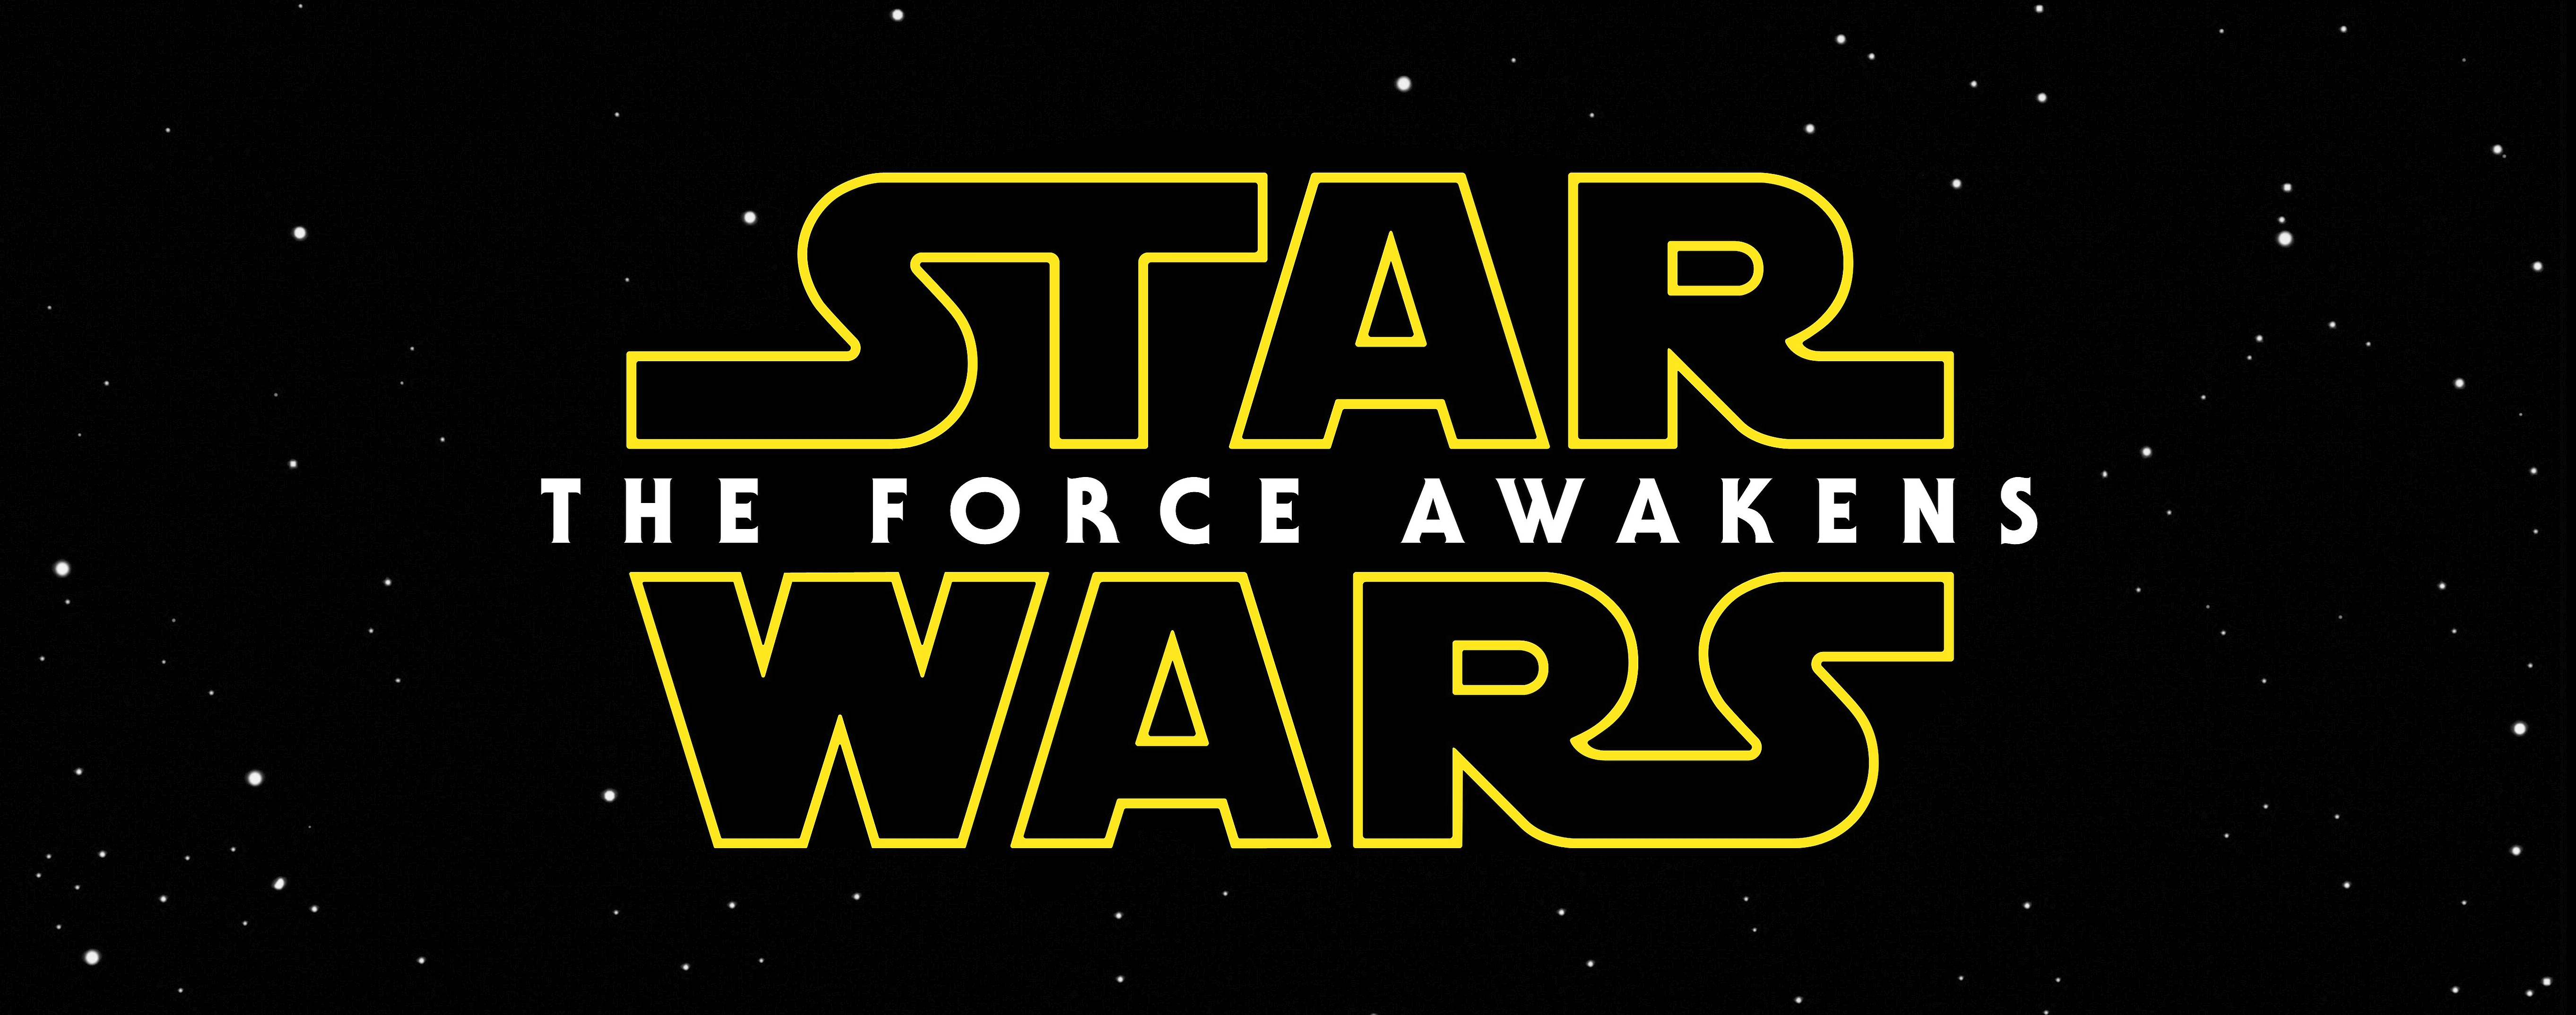 Star Wars Star Wars Episode Vii The Force Awakens 5450x2147